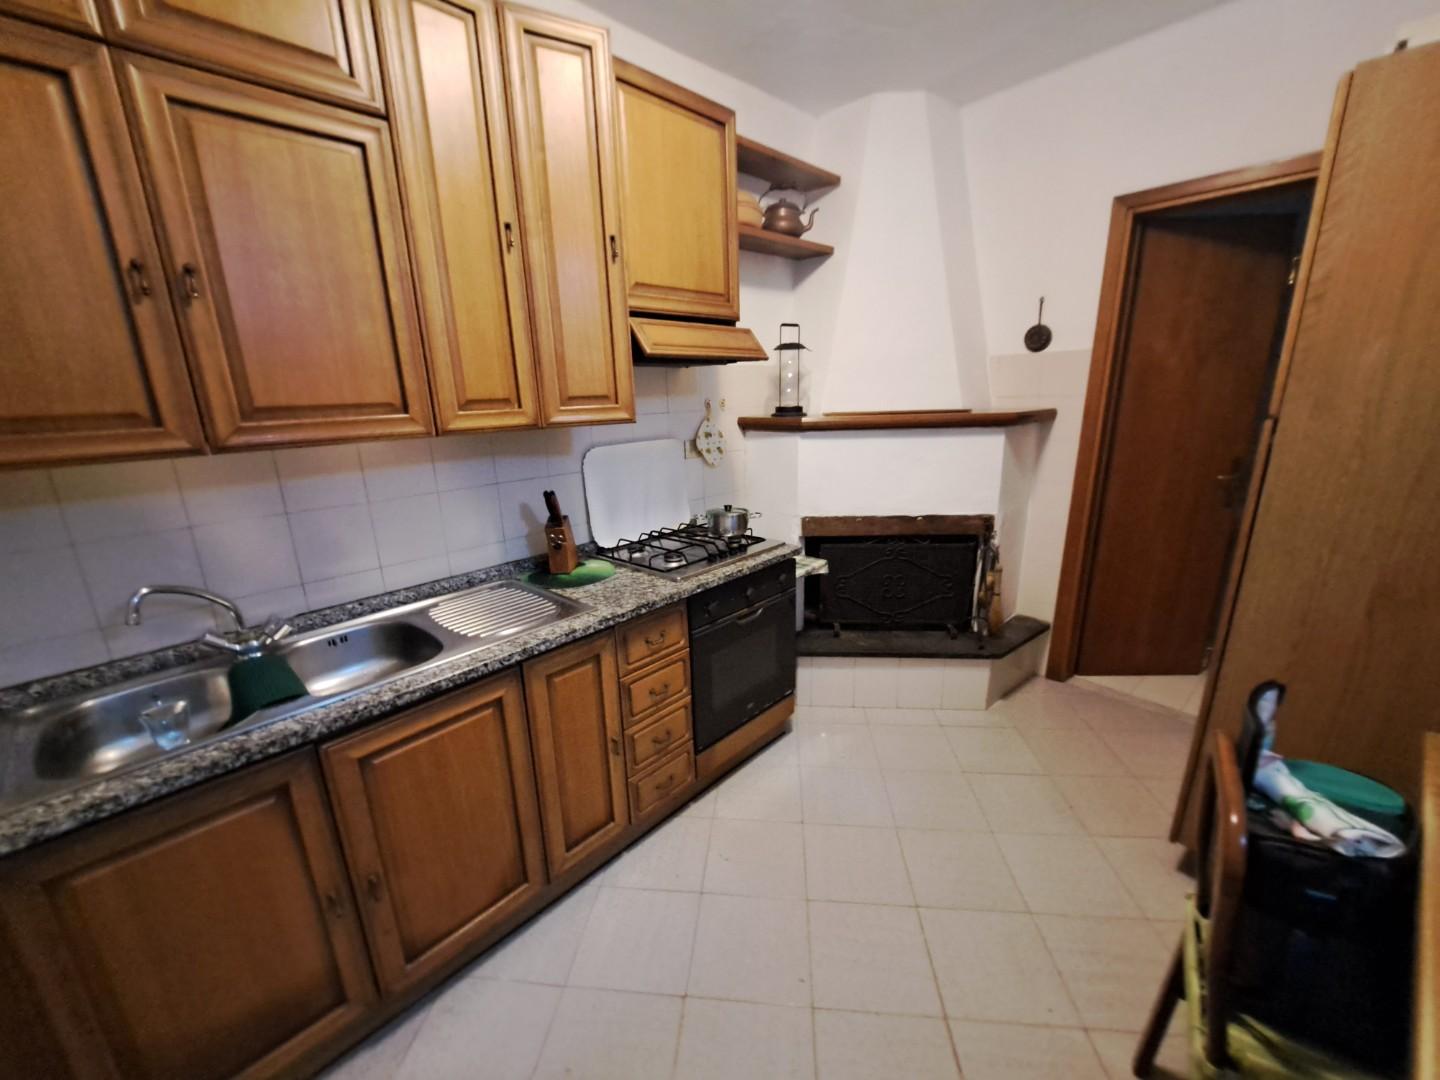 Portion of house for sale in Peccioli (PI)